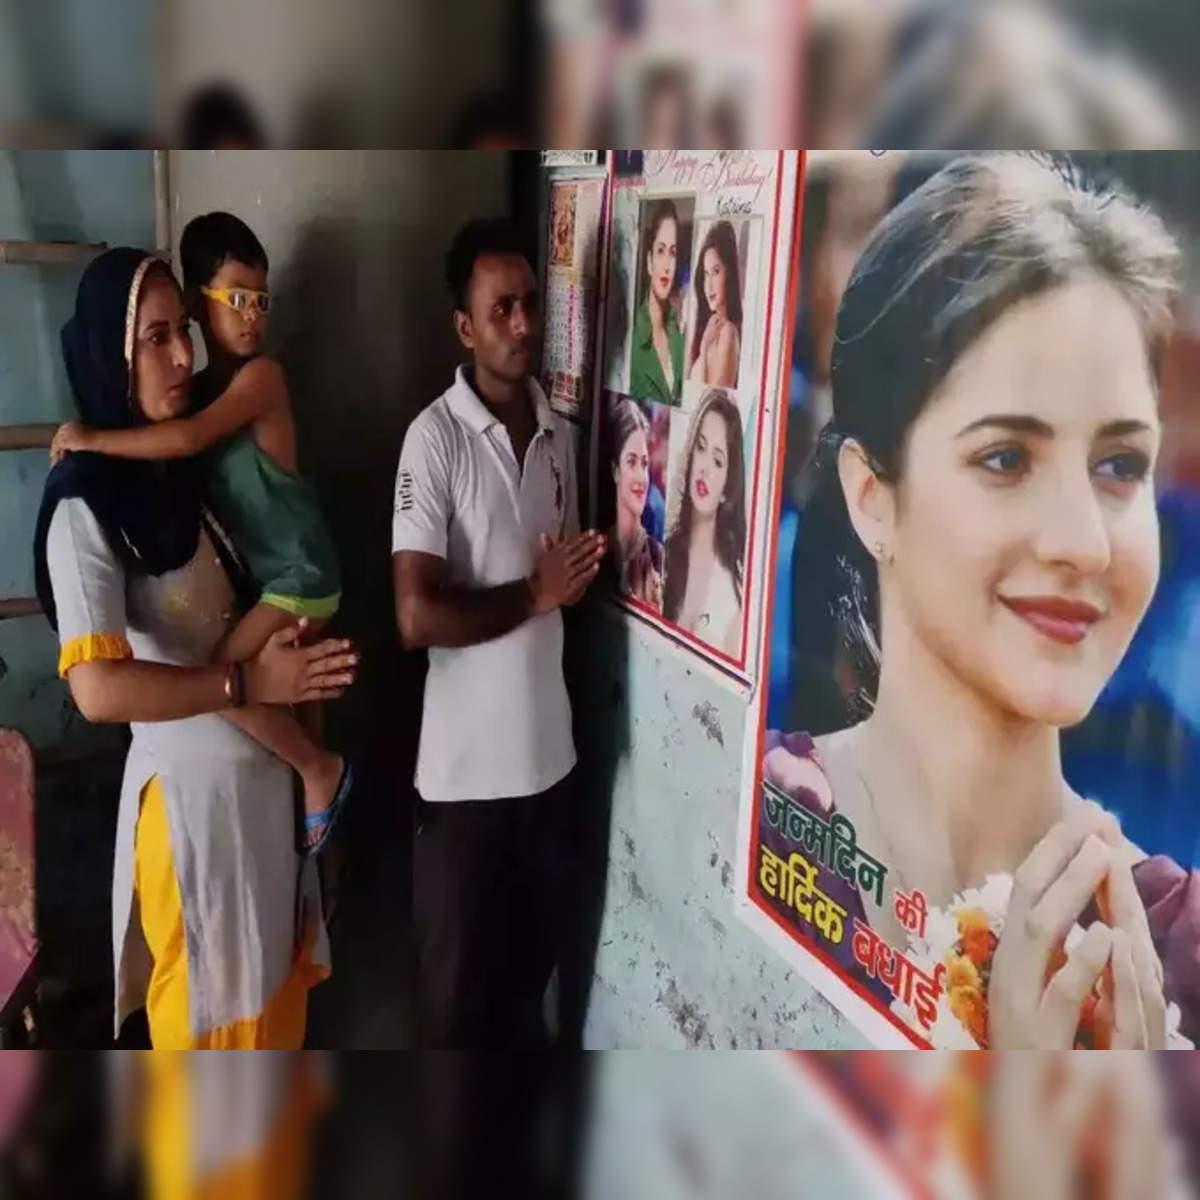 Gruop Sax Ketrina Kif Saxy Vodeo - katrina kaif: Couple in Haryana worship bollywood actor Katrina Kaif as god  - The Economic Times